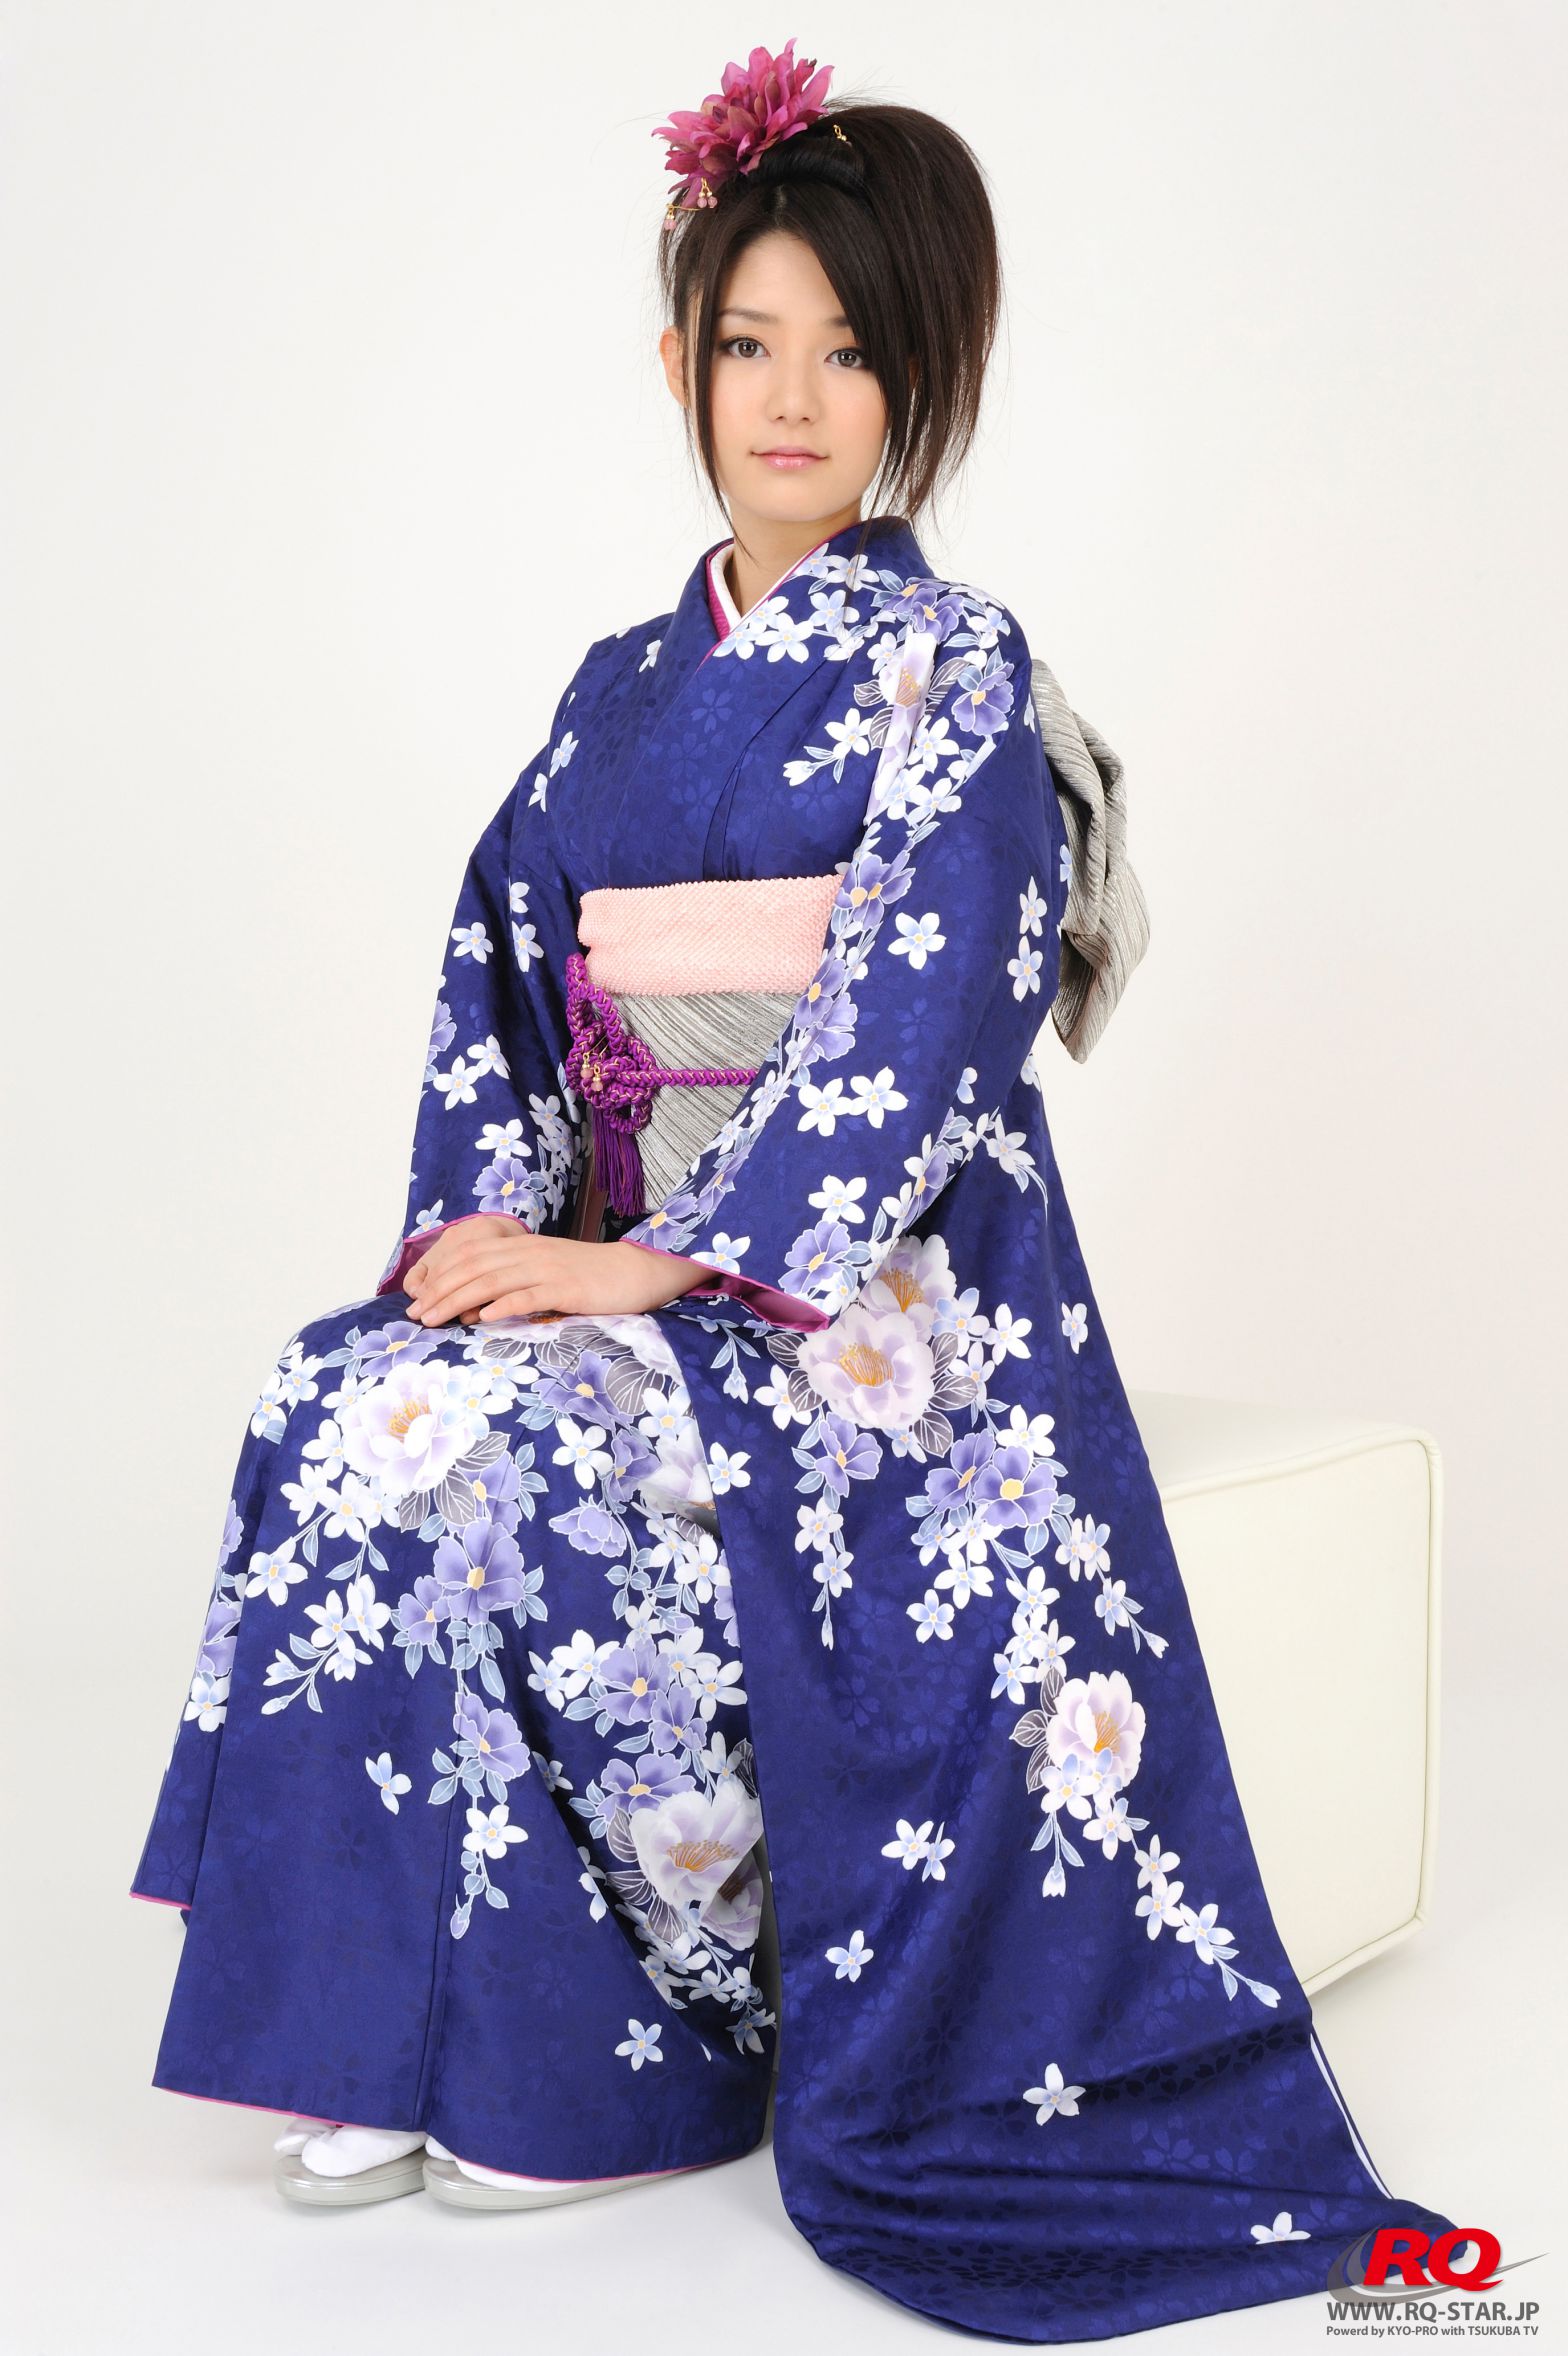 [RQ-STAR] NO.00068 古崎瞳 謹賀新年 Kimono – Happy New Year 和服系列40